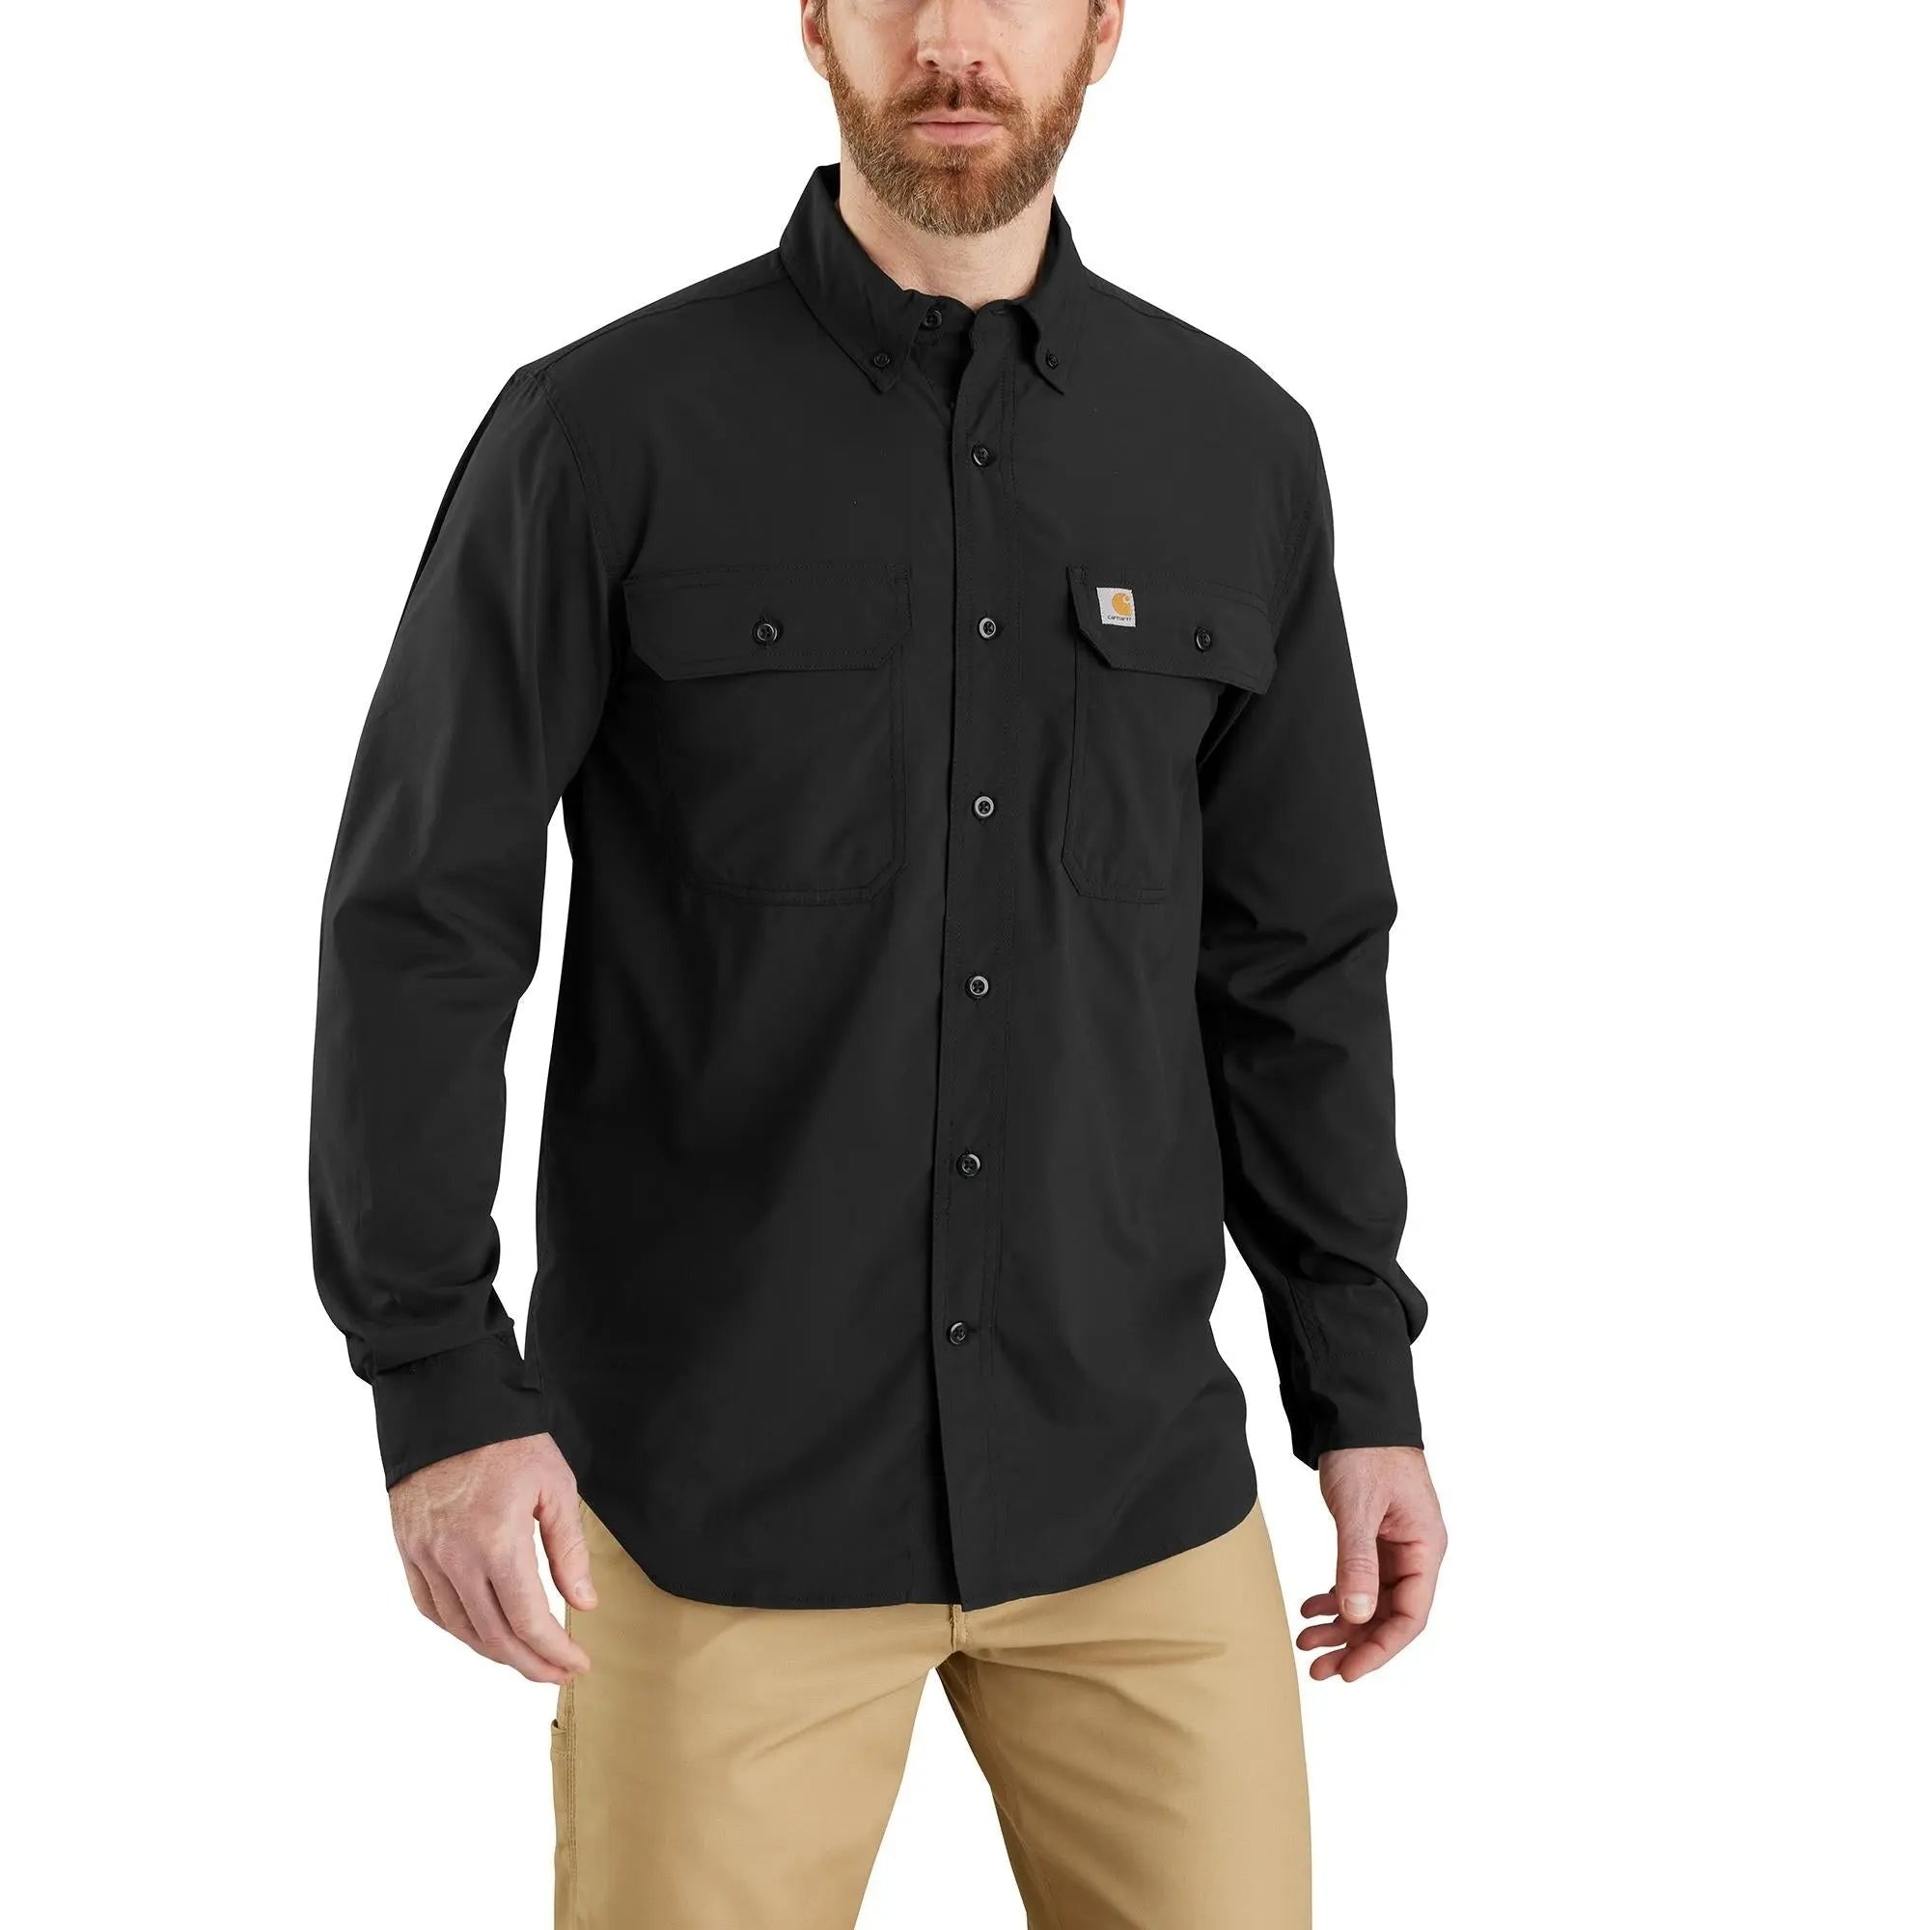 CARHARTT - FORCE Relaxed fit Lightweight Long Sleeve Shirt - Becker Safety and Supply